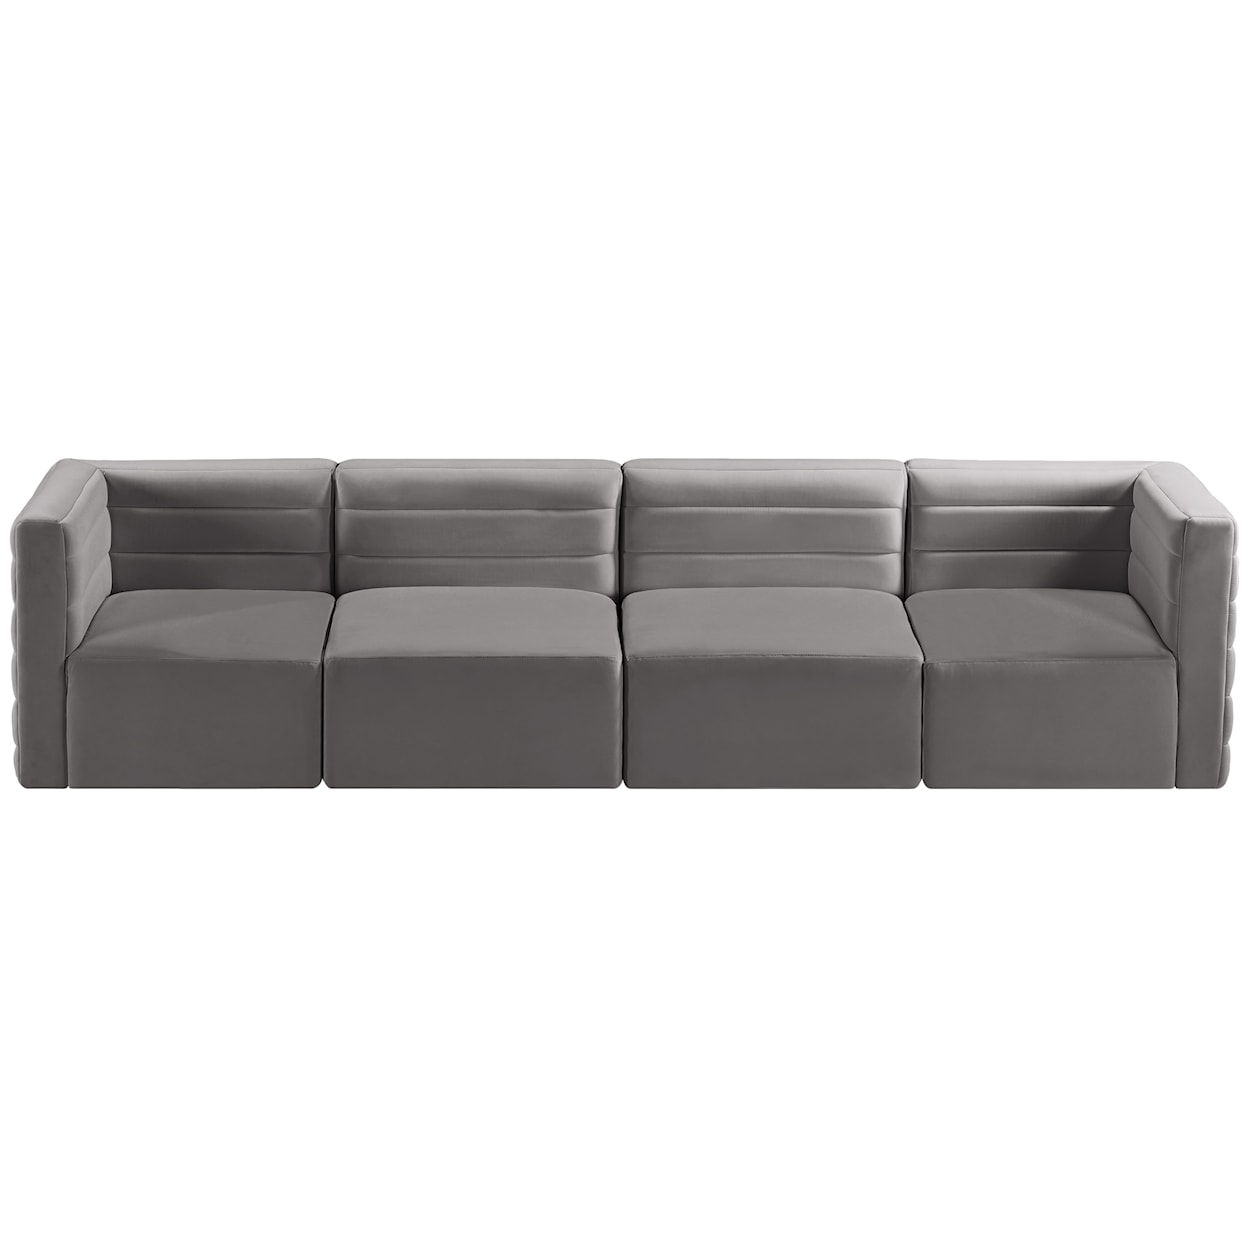 Meridian Furniture Quincy Modular Sofa